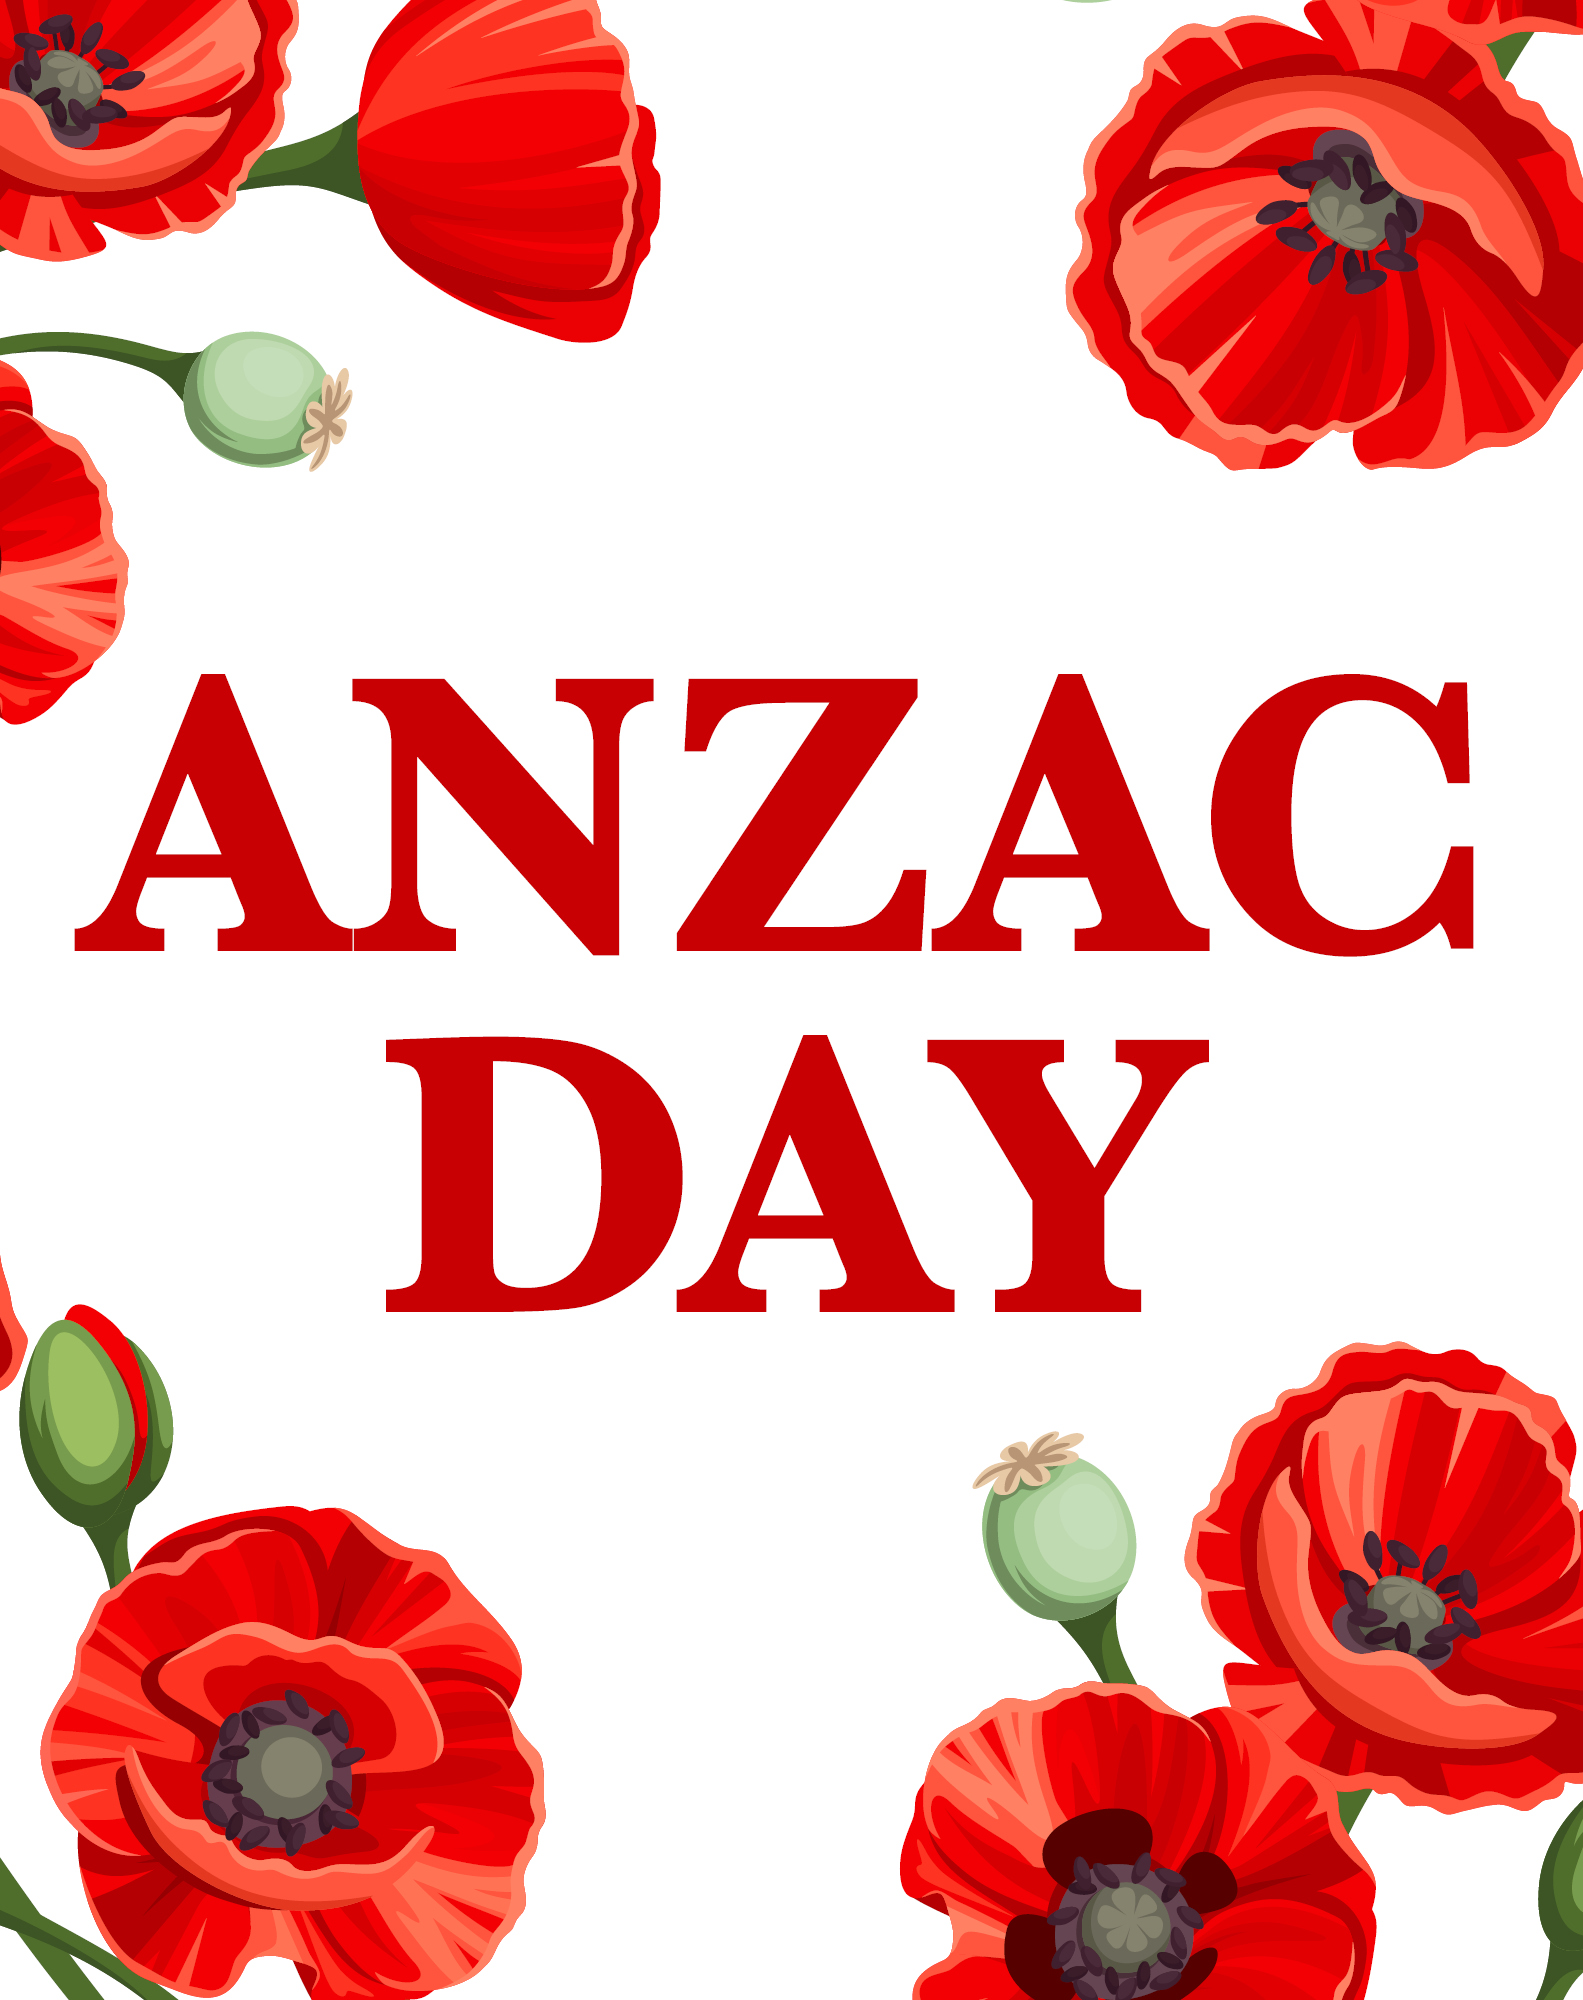 ANZAC DAY